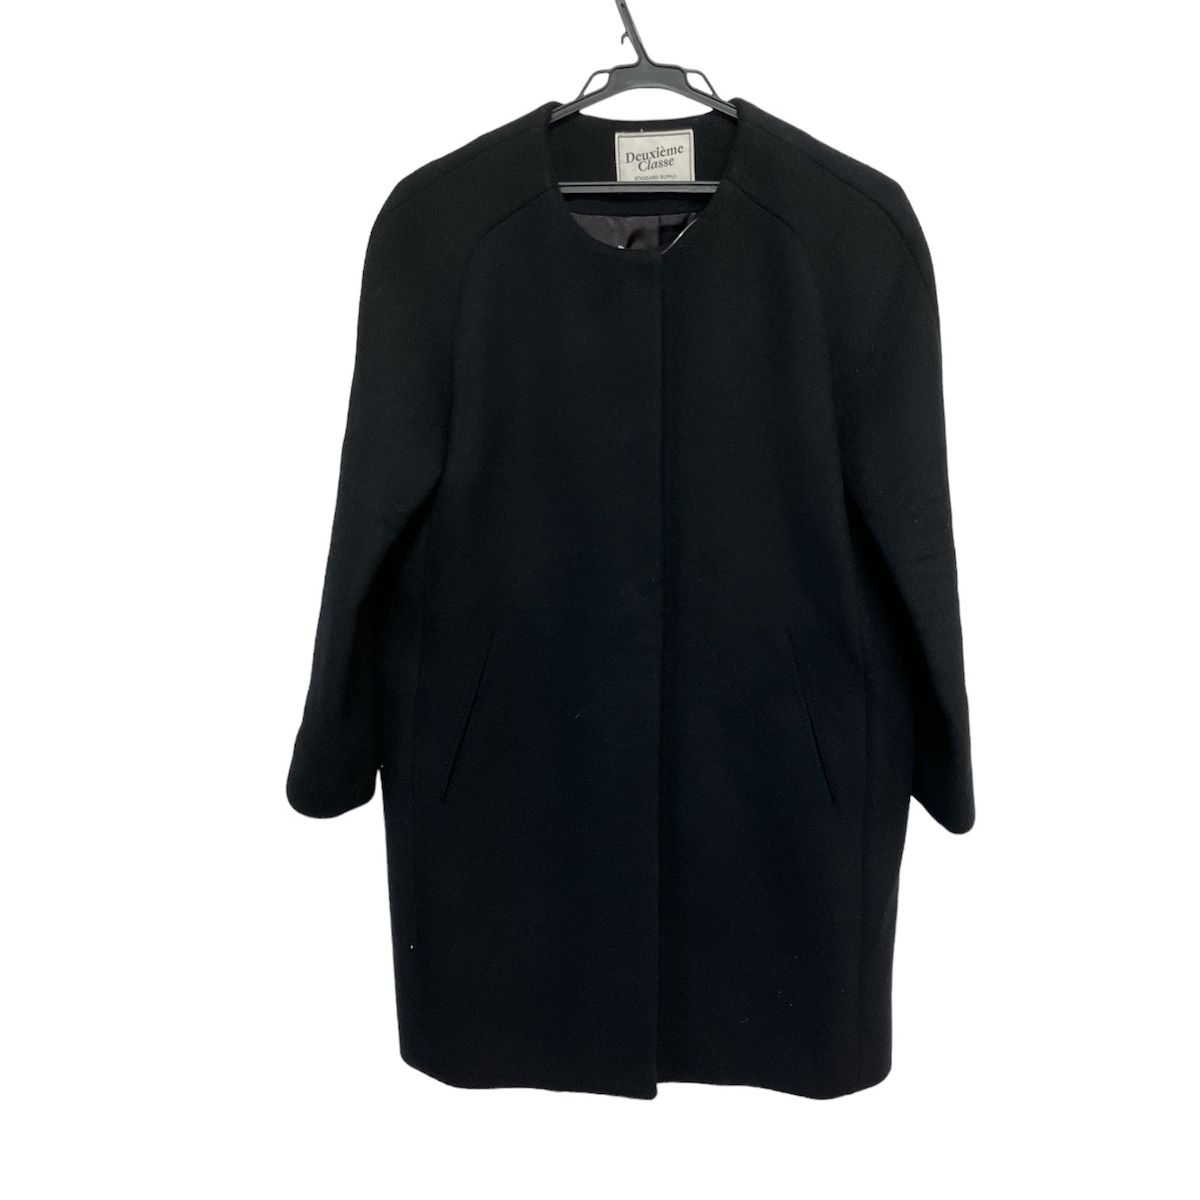 DEUXIEME CLASSE(ドゥーズィエム) コート サイズ36 S レディース美品 - 黒 長袖/冬